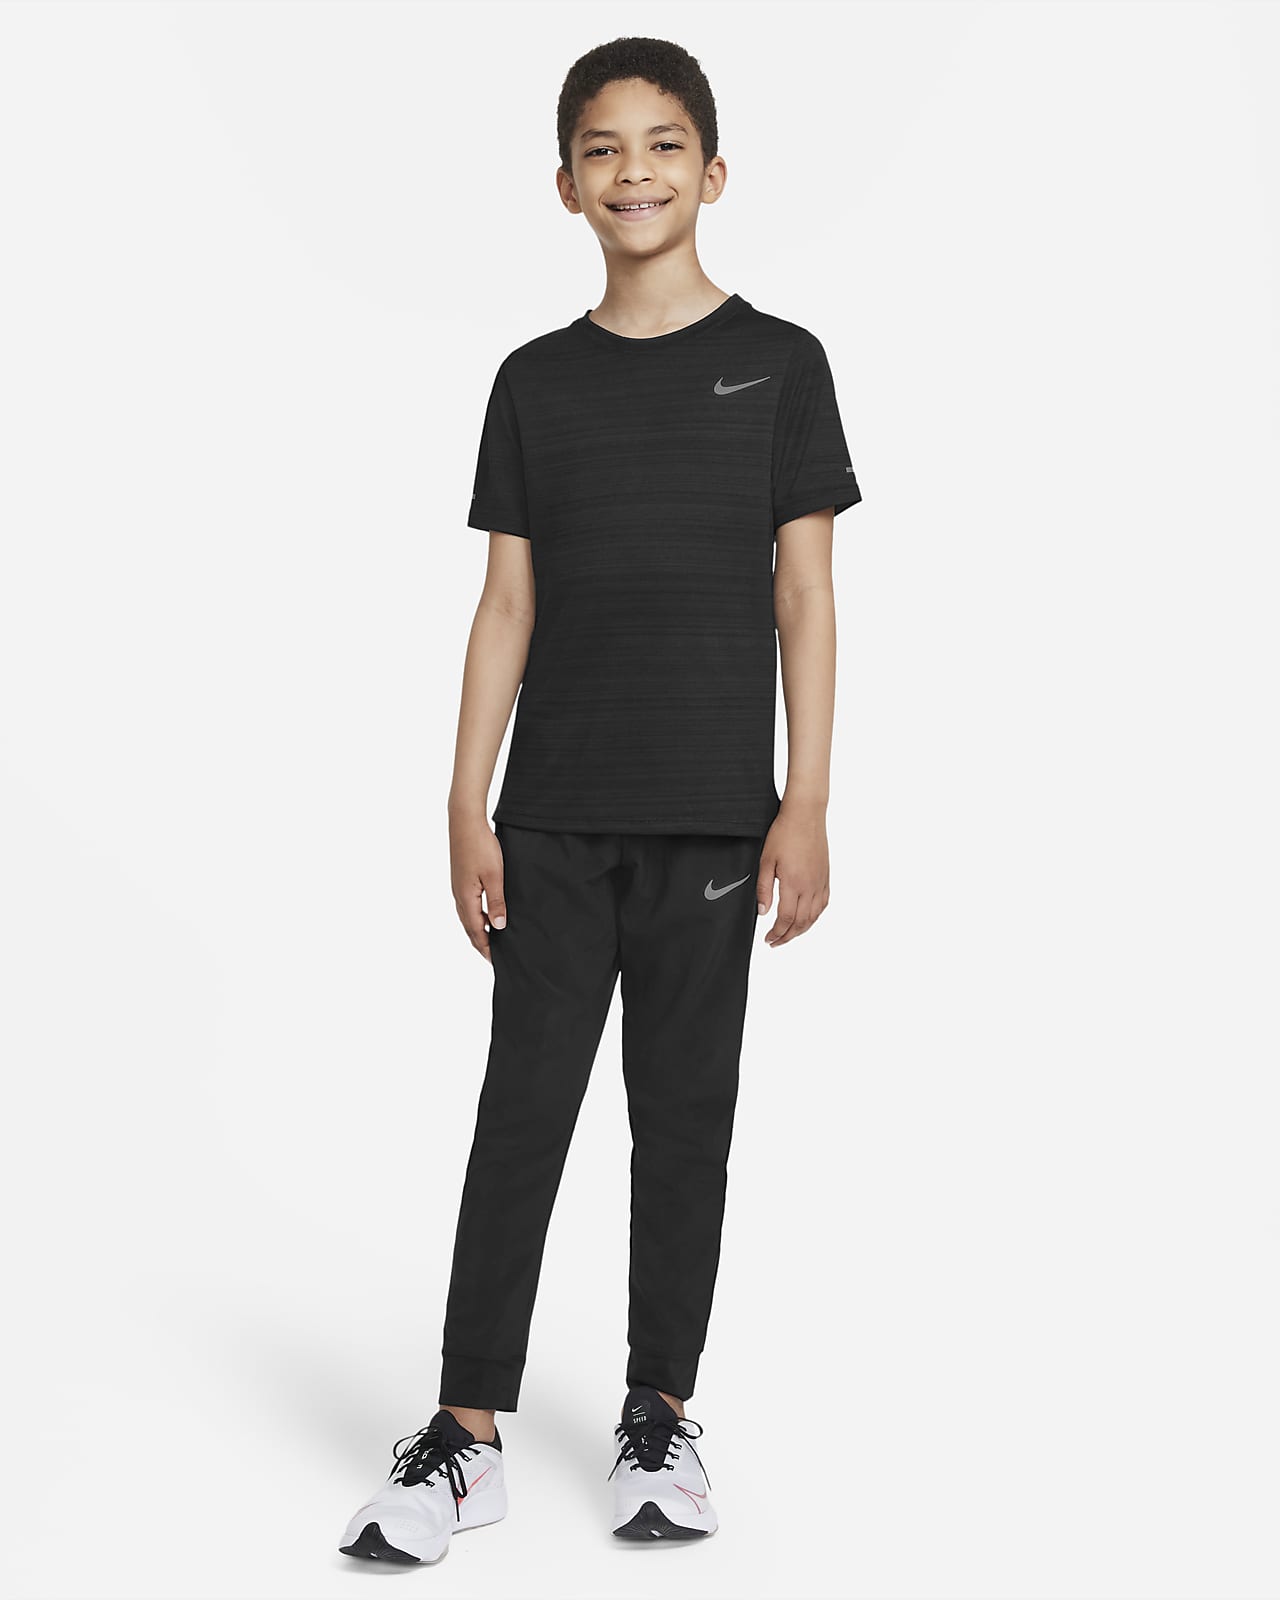 Nike Dri-Fit Boys Kids Jogging Athletic Sweatpants Basketball Pants S Black  New | eBay